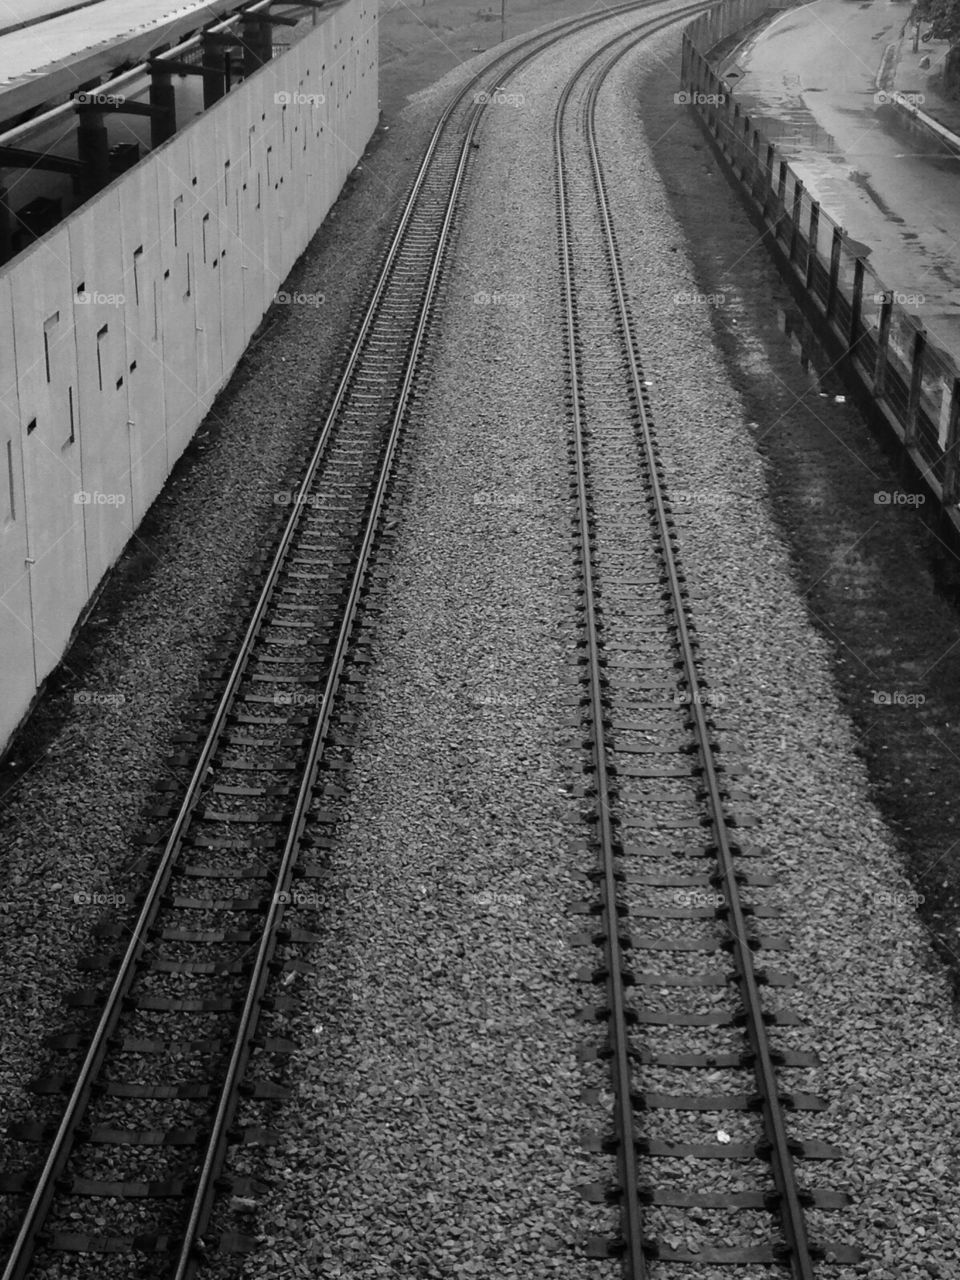 Tracks of life